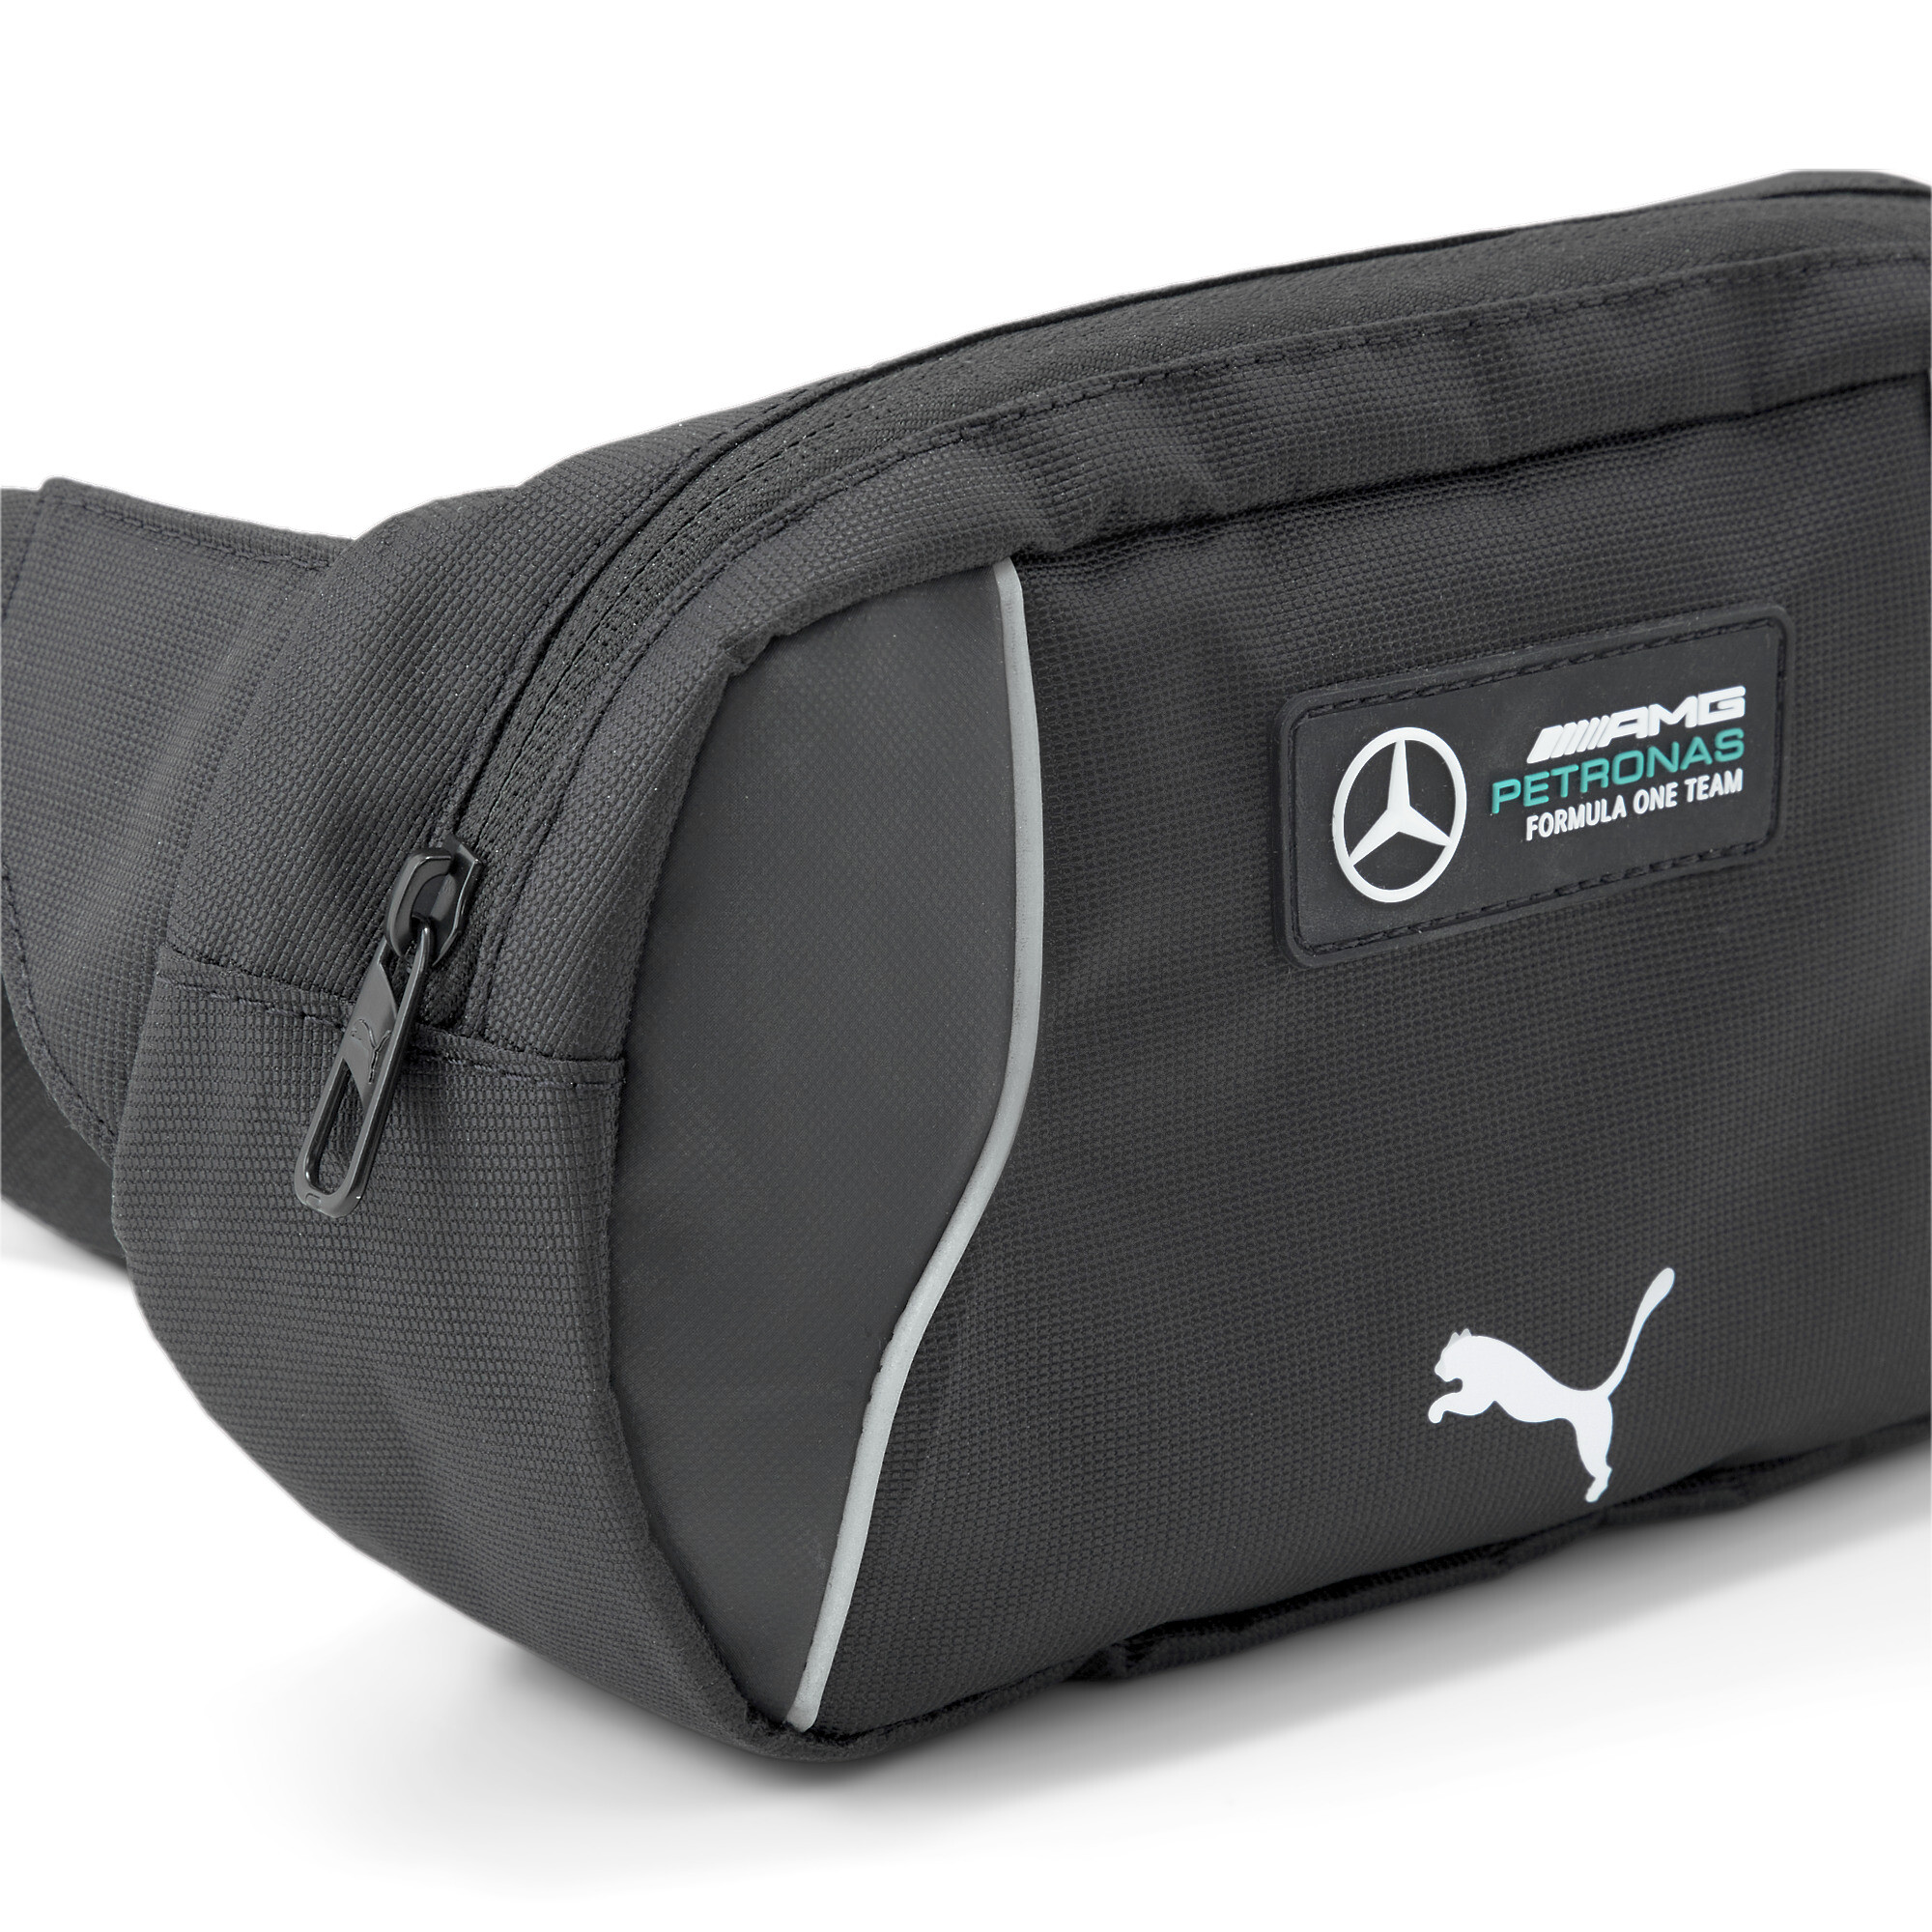 Men's PUMA Mercedes-AMG Petronas Motorsport Waist Bag In Black